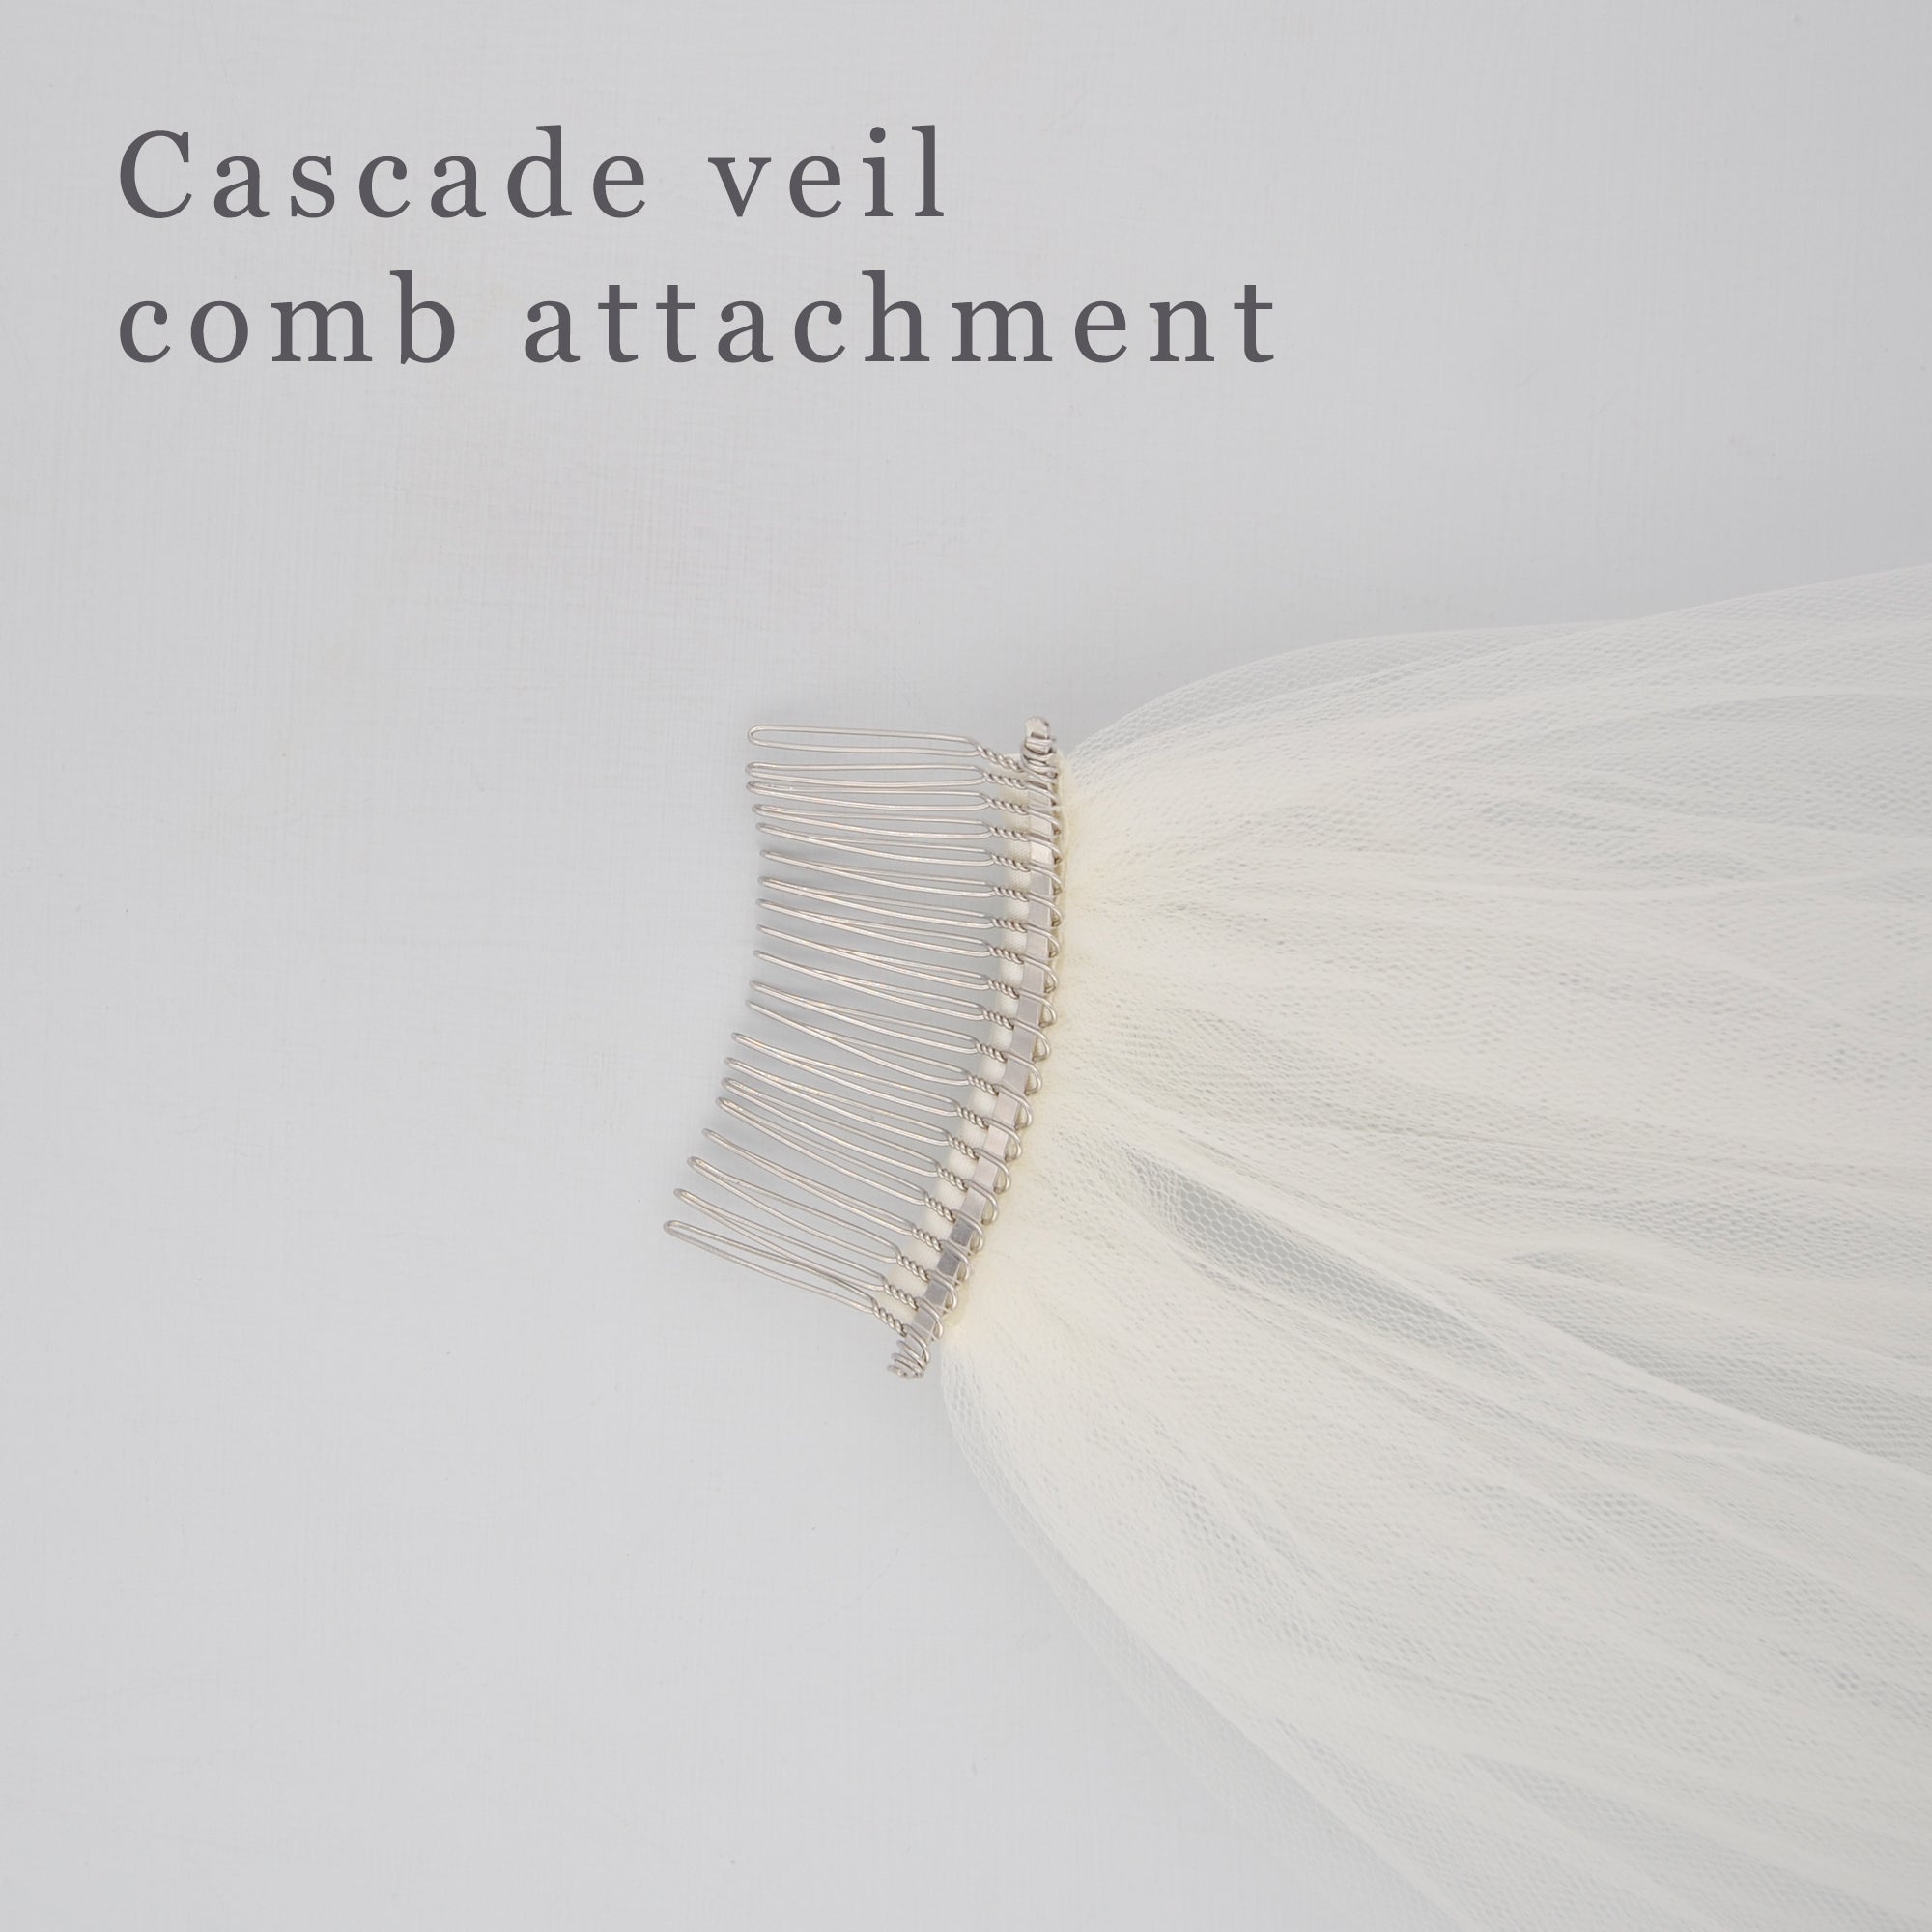 cascade veil comb attachment